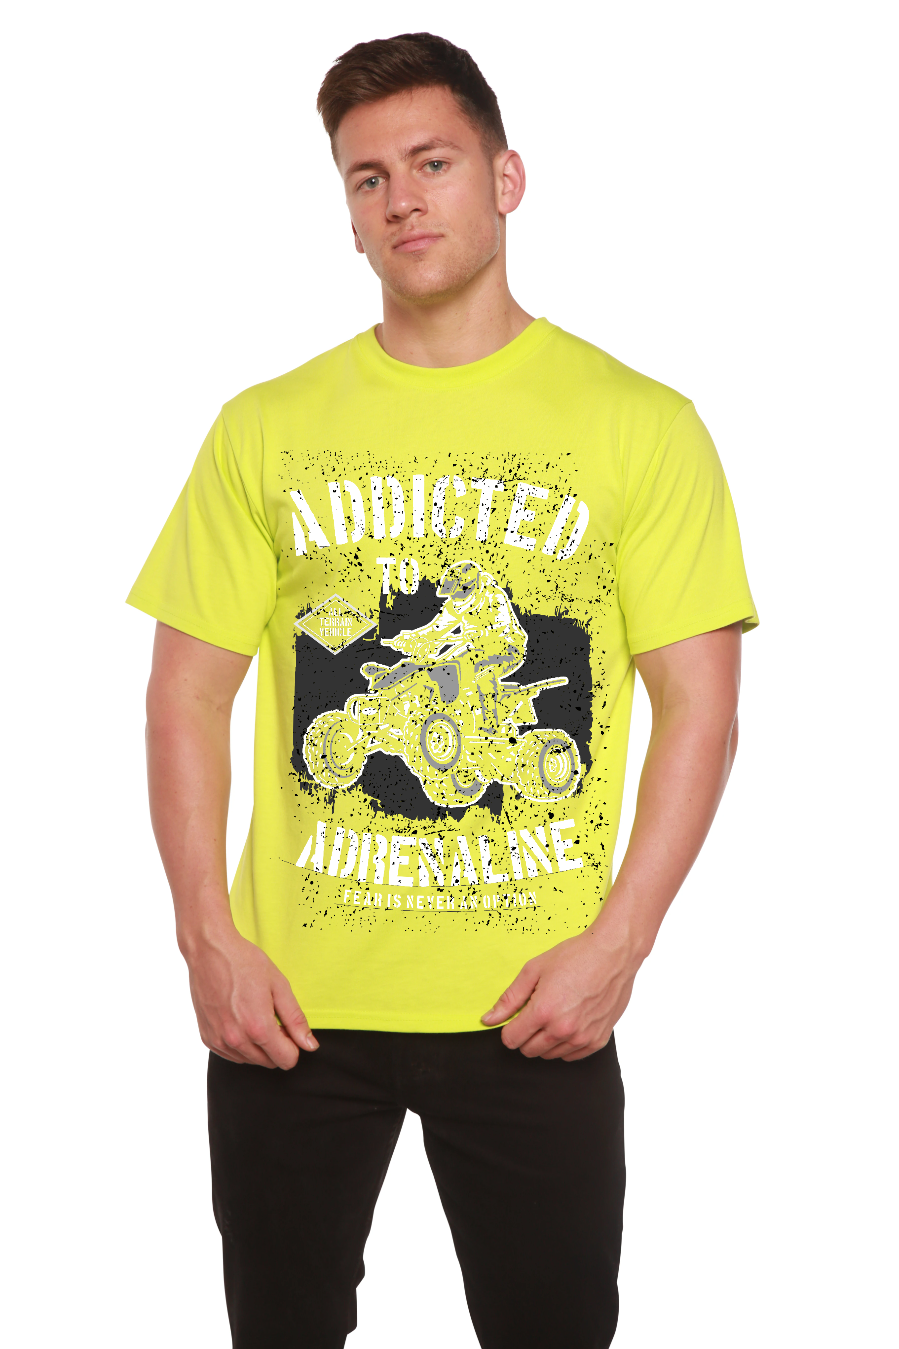 Addicted To Adrenaline Men's Bamboo Viscose/Organic Cotton Short Sleeve T-Shirt - Spun Bamboo